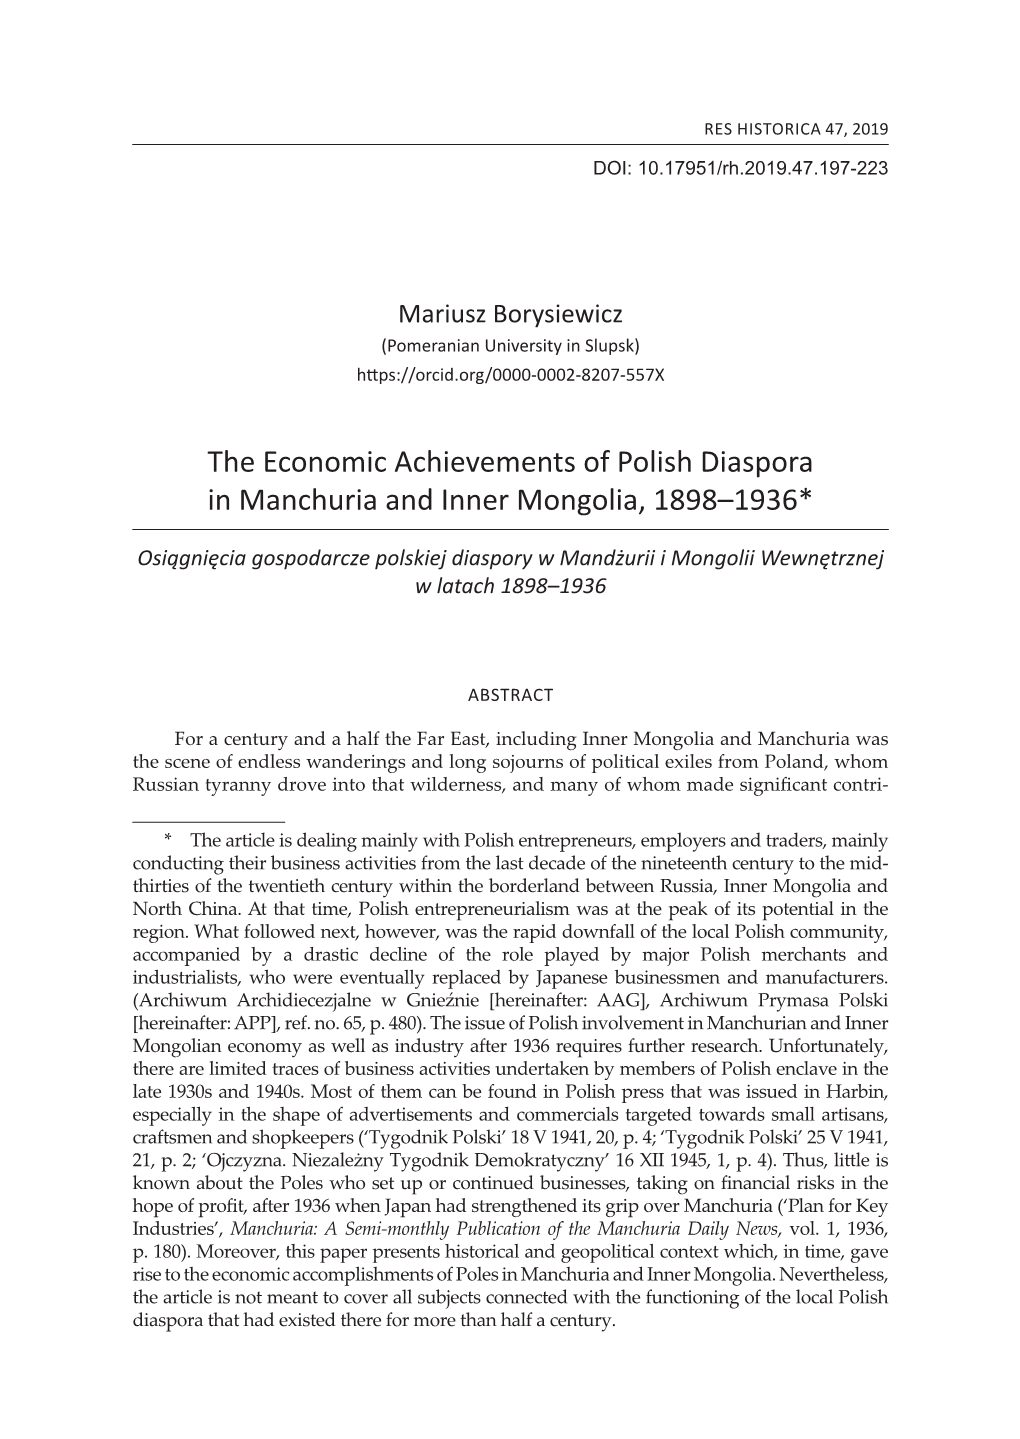 The Economic Achievements of Polish Diaspora in Manchuria and Inner Mongolia, 1898–1936*